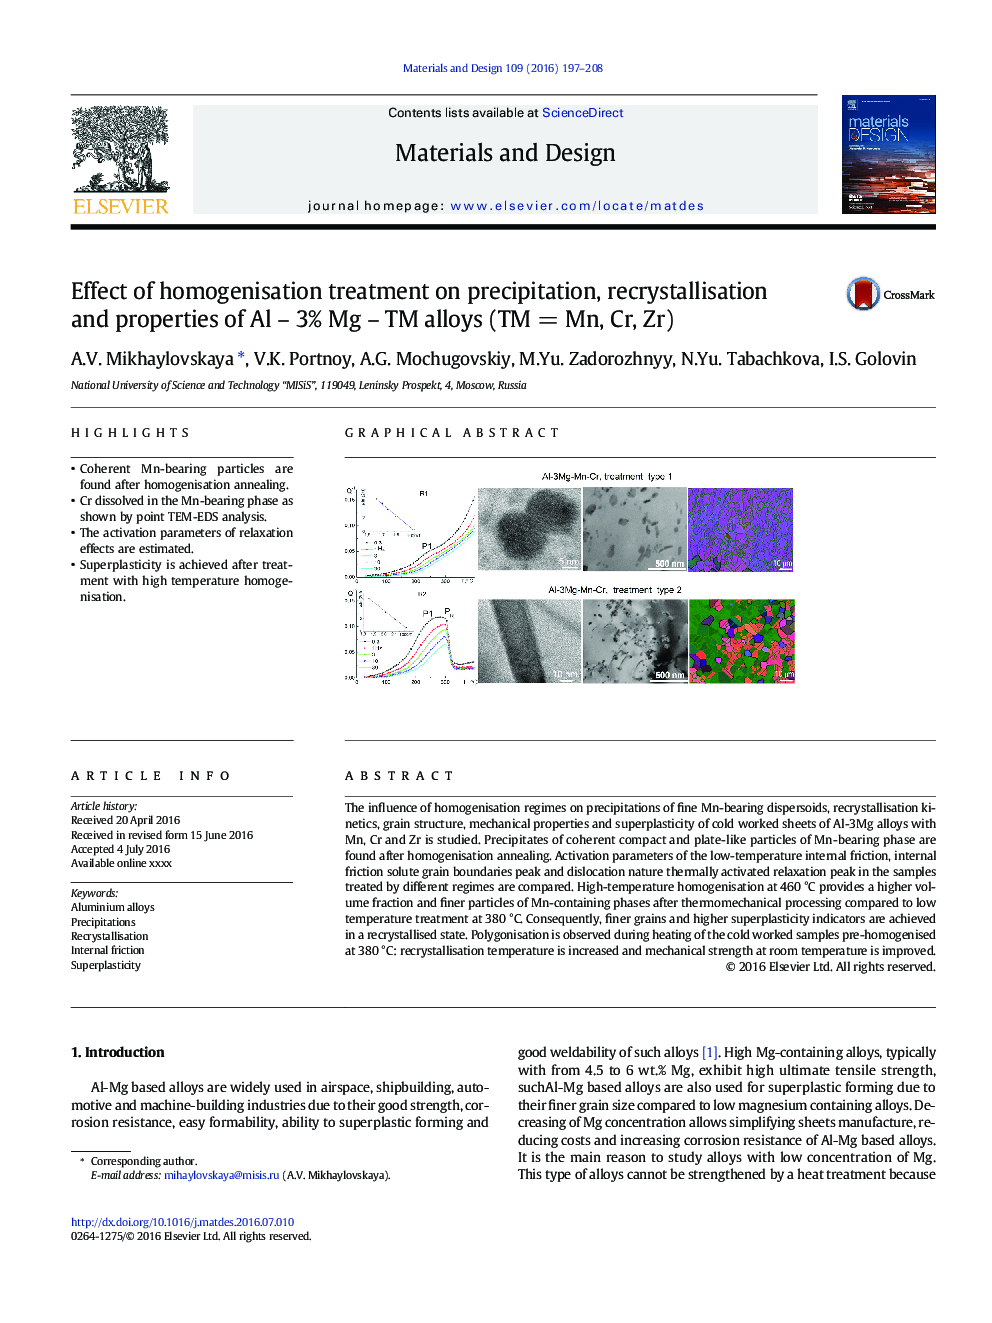 Effect of homogenisation treatment on precipitation, recrystallisation and properties of Al – 3% Mg – TM alloys (TM = Mn, Cr, Zr)